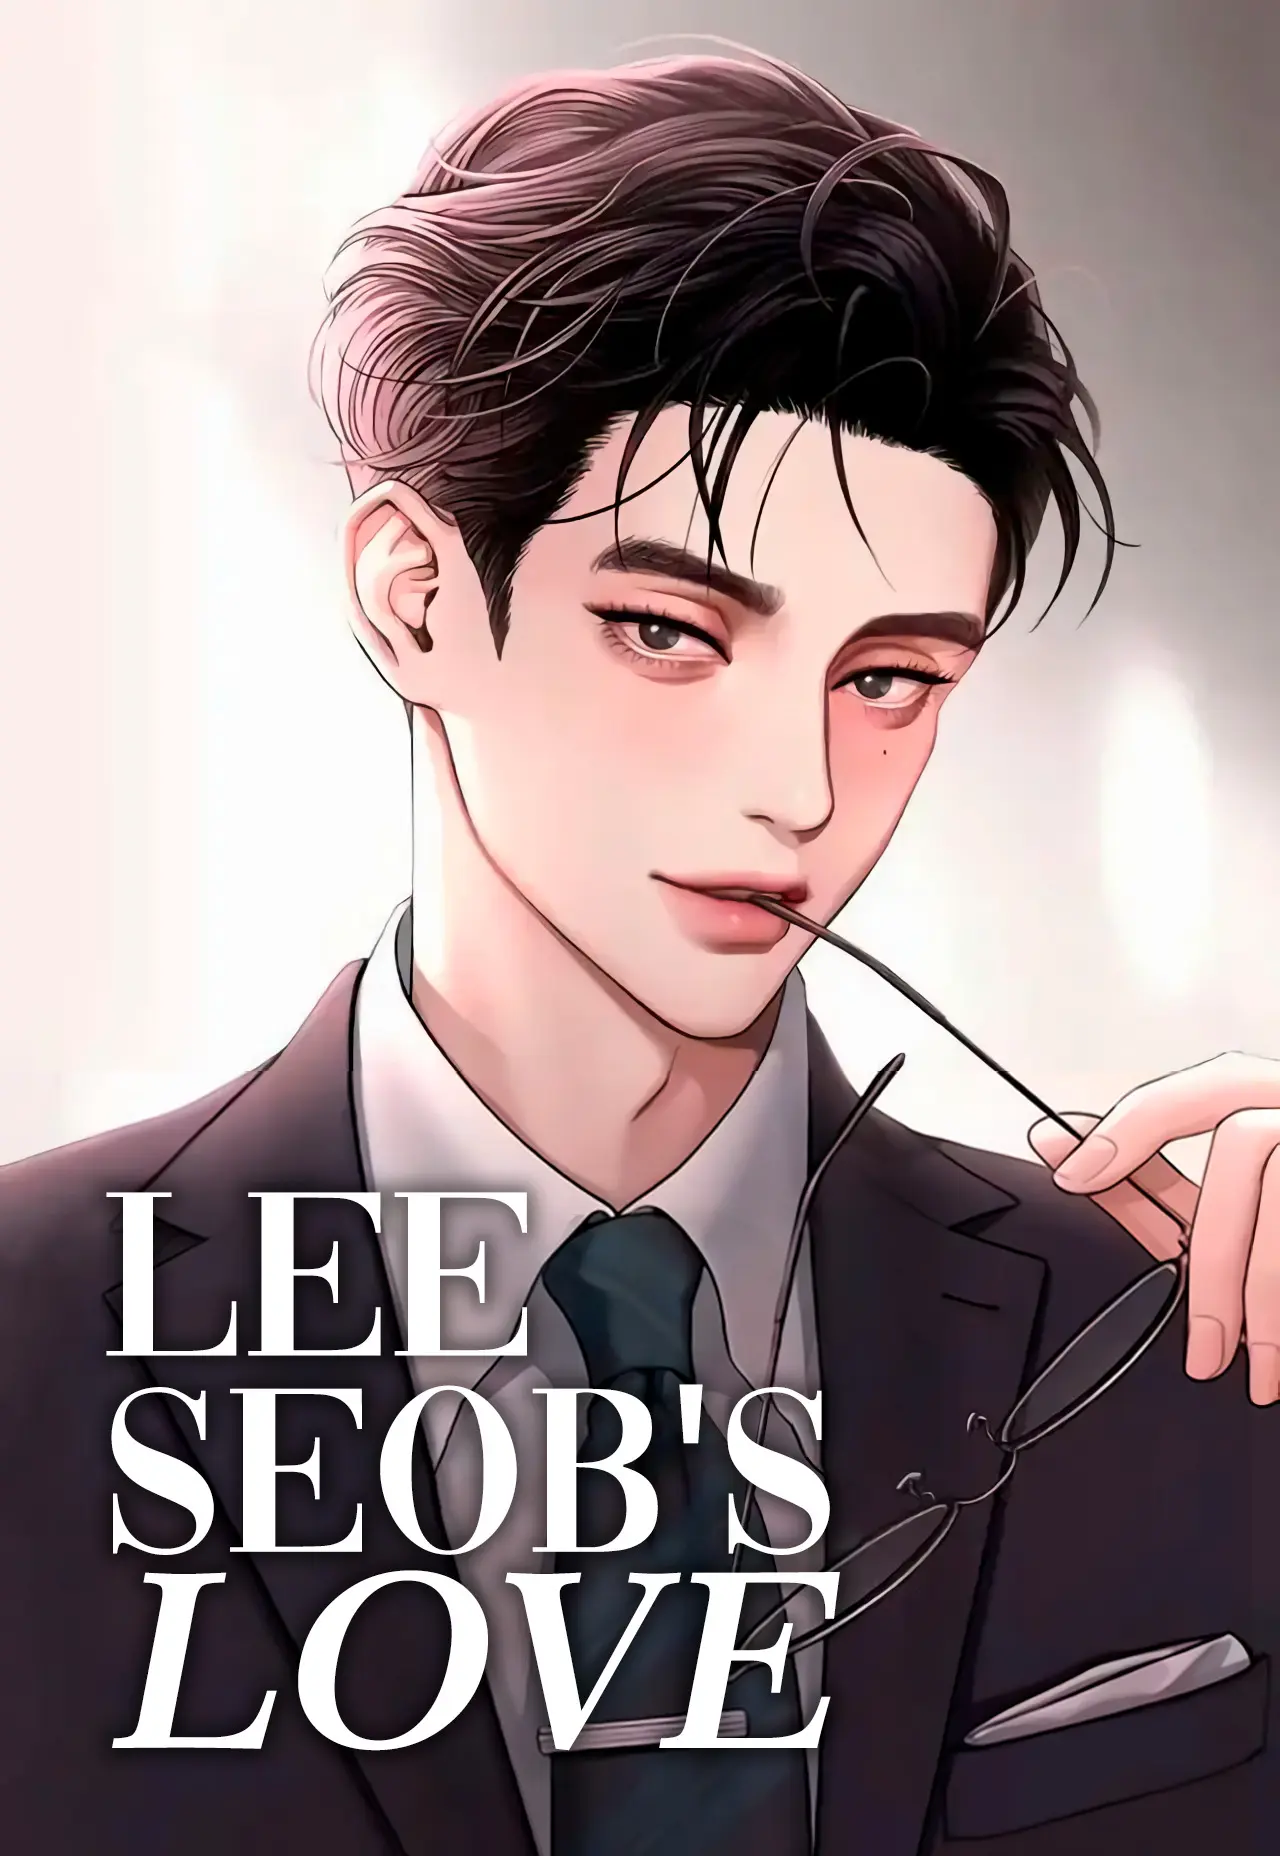 Lee Seob’s love